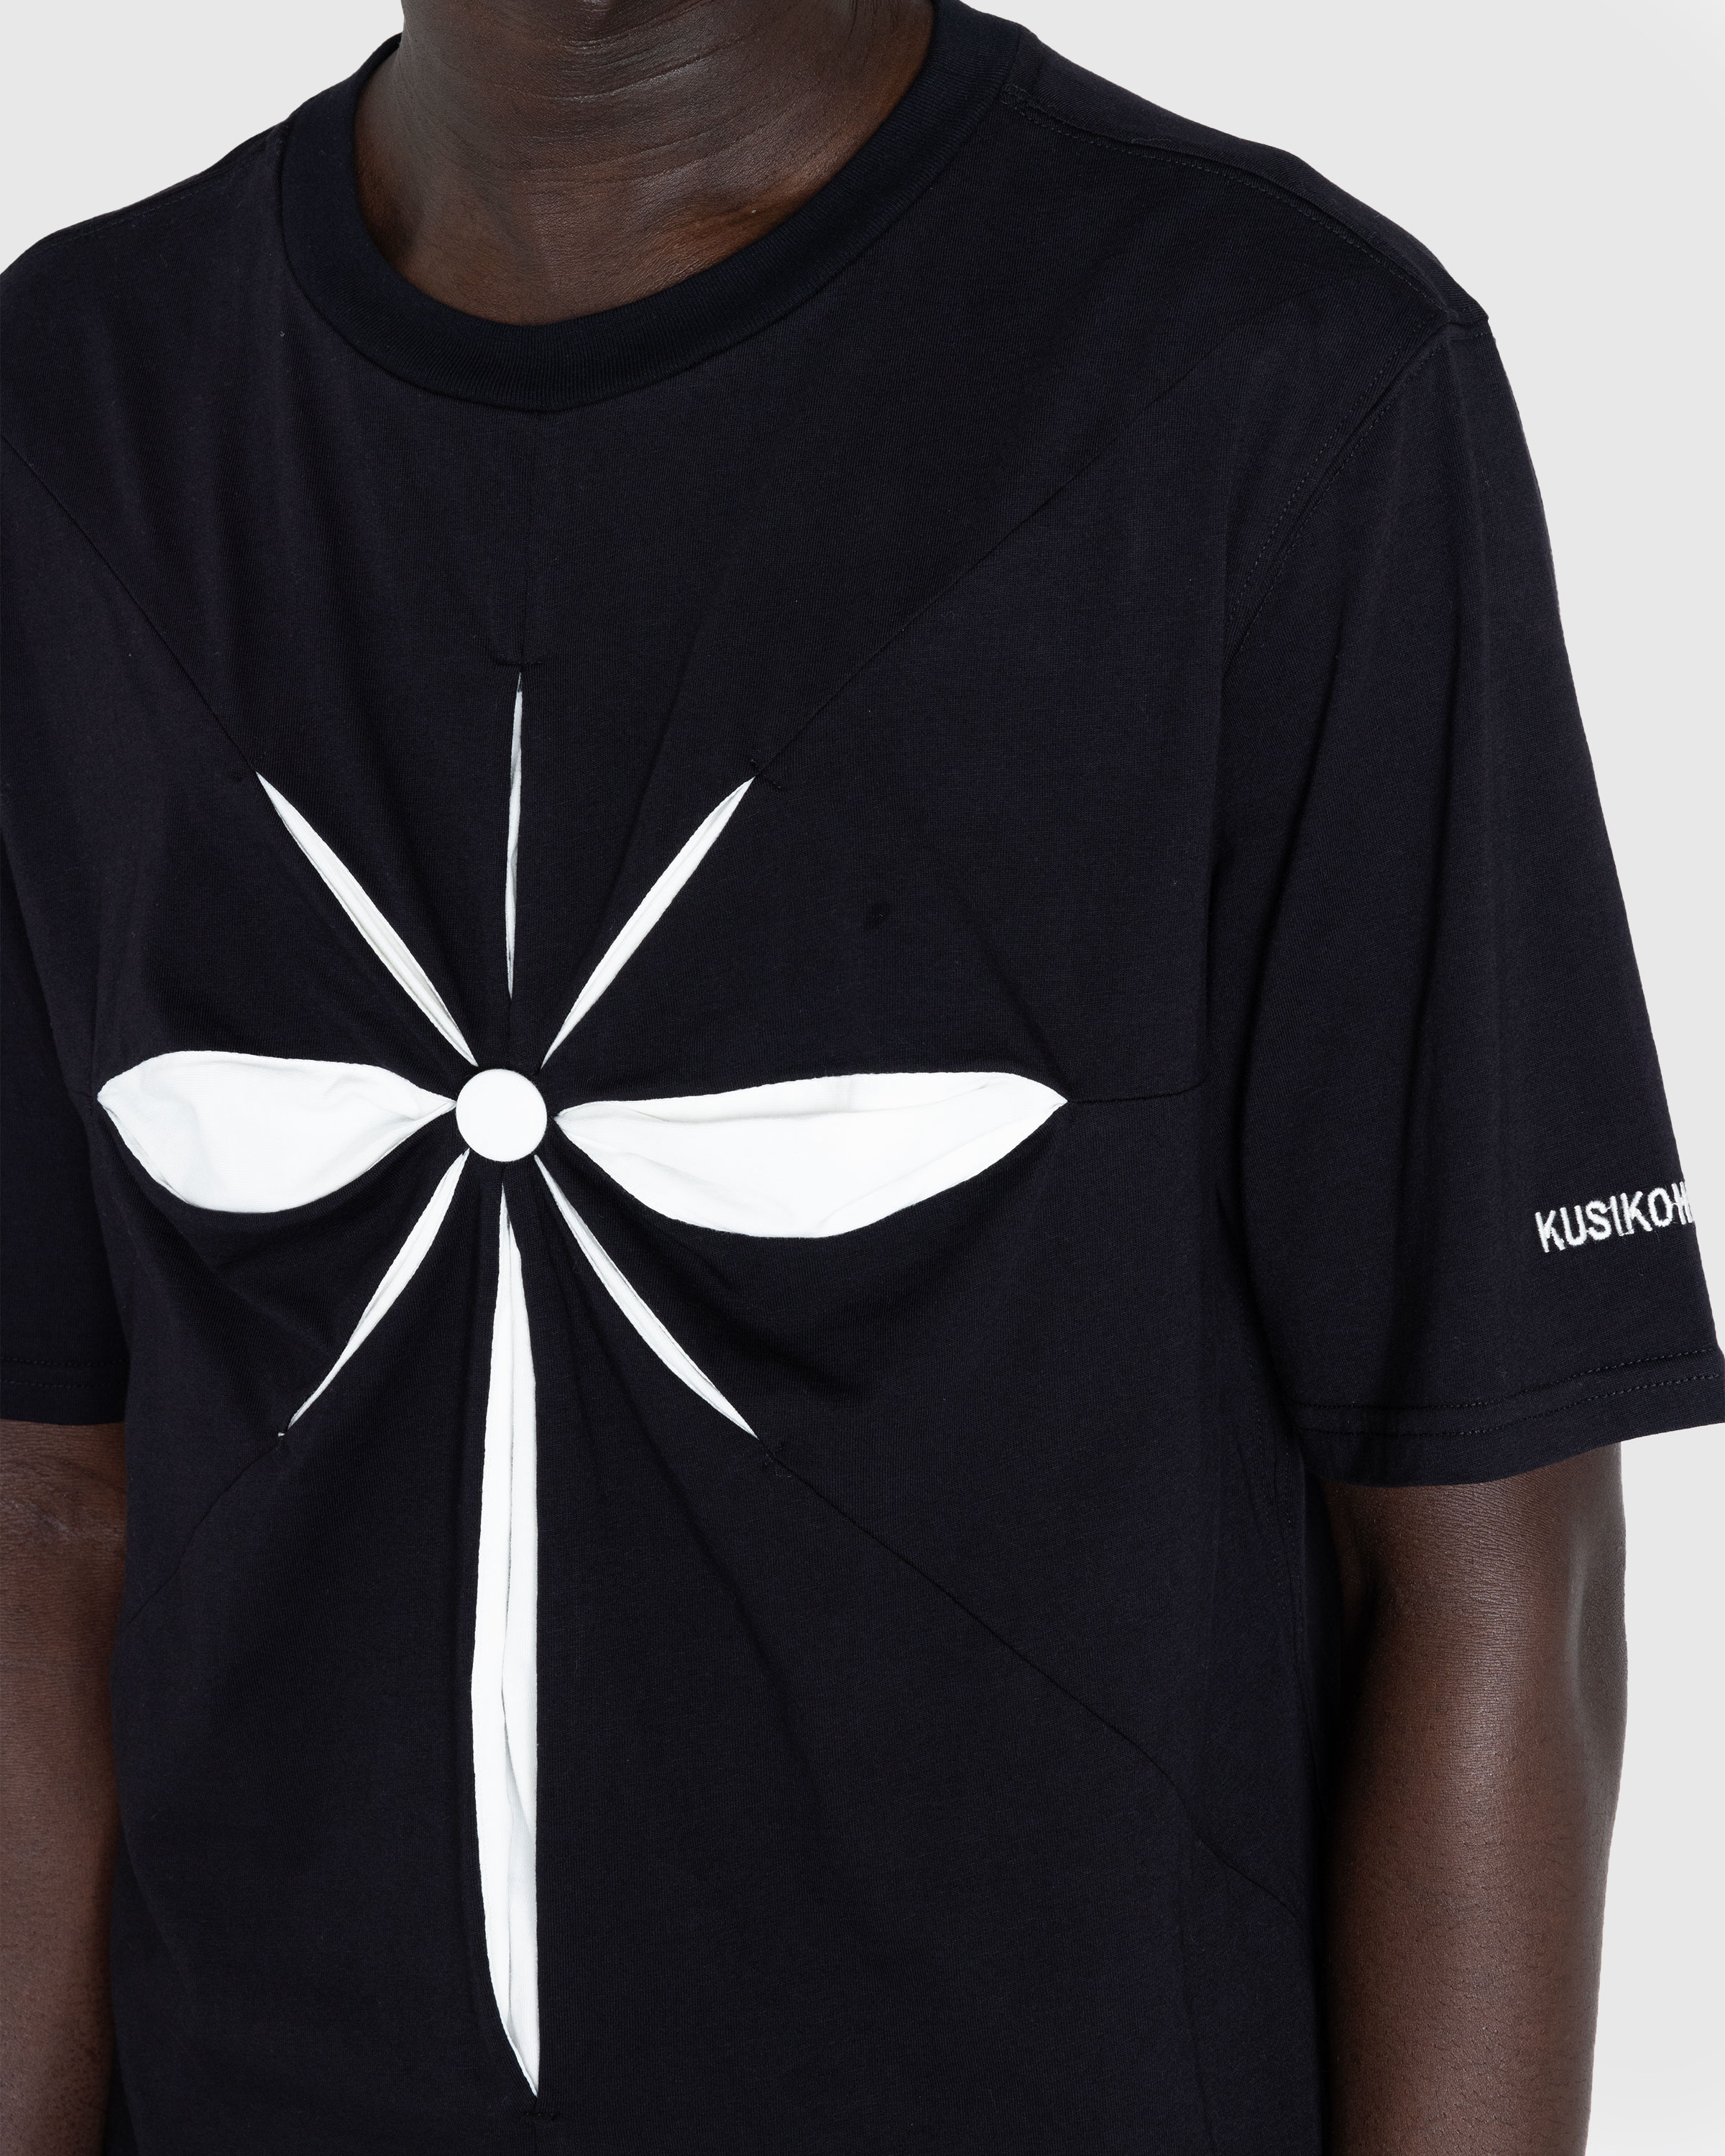 KUSIKOHC – Origami T-Shirt Black/White Alyssum - Tops - Black - Image 5